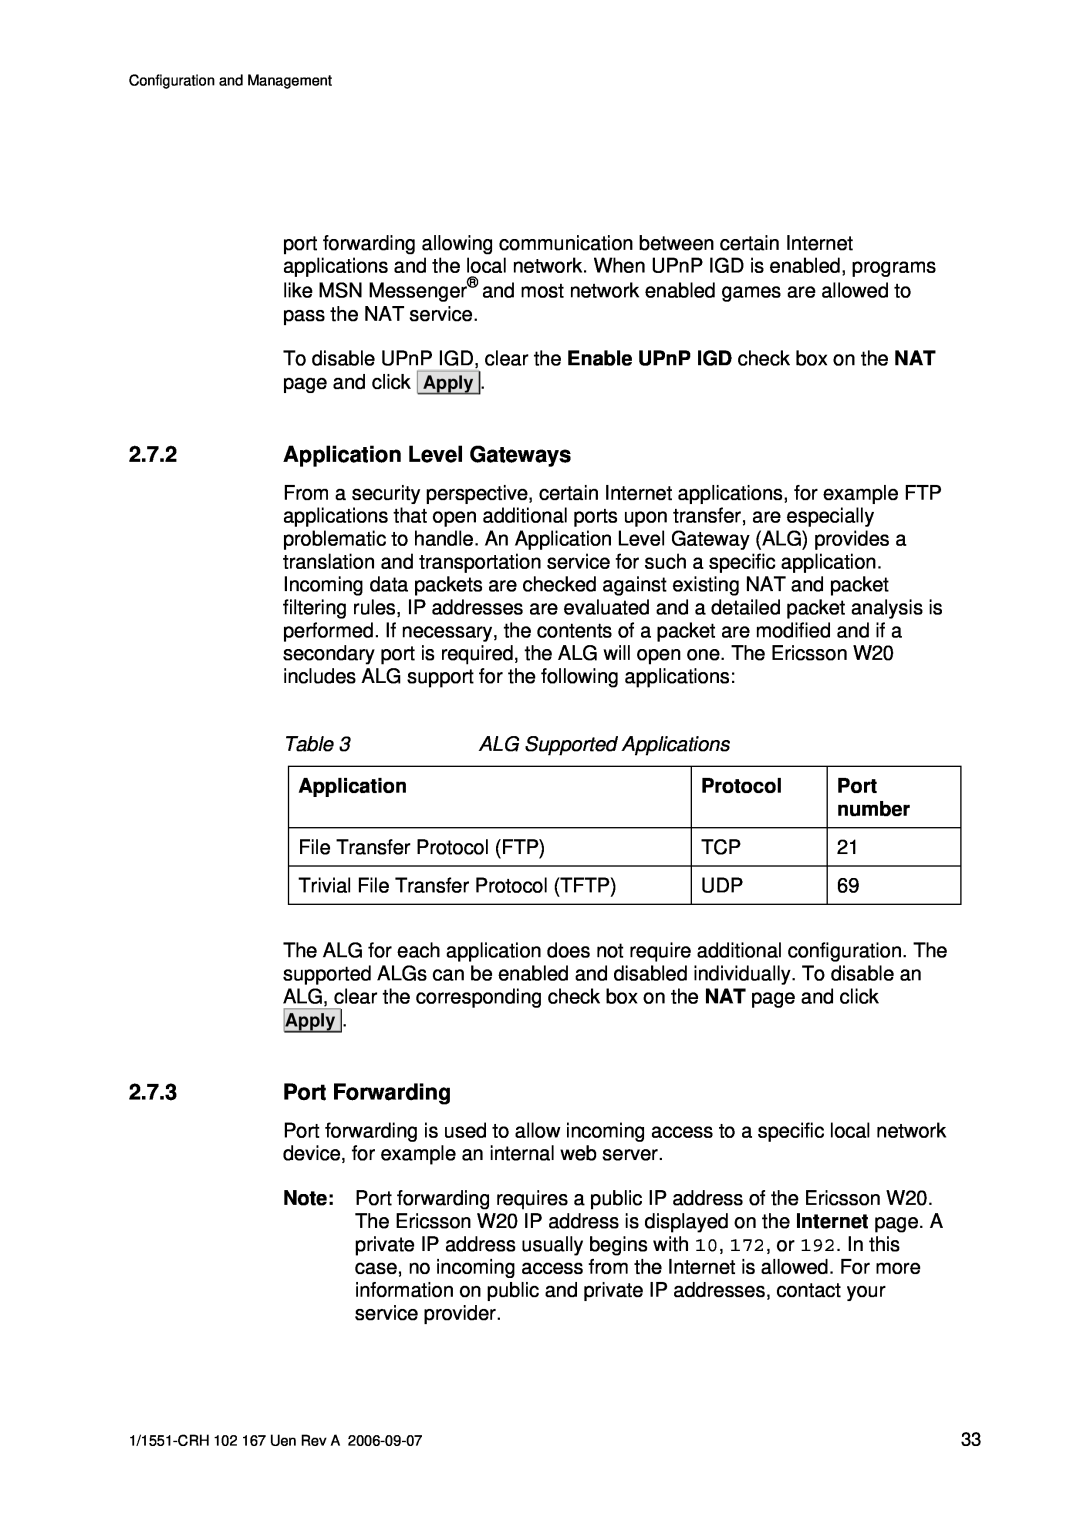 Ericsson W20 manual Application Level Gateways, Port Forwarding, Protocol, number 